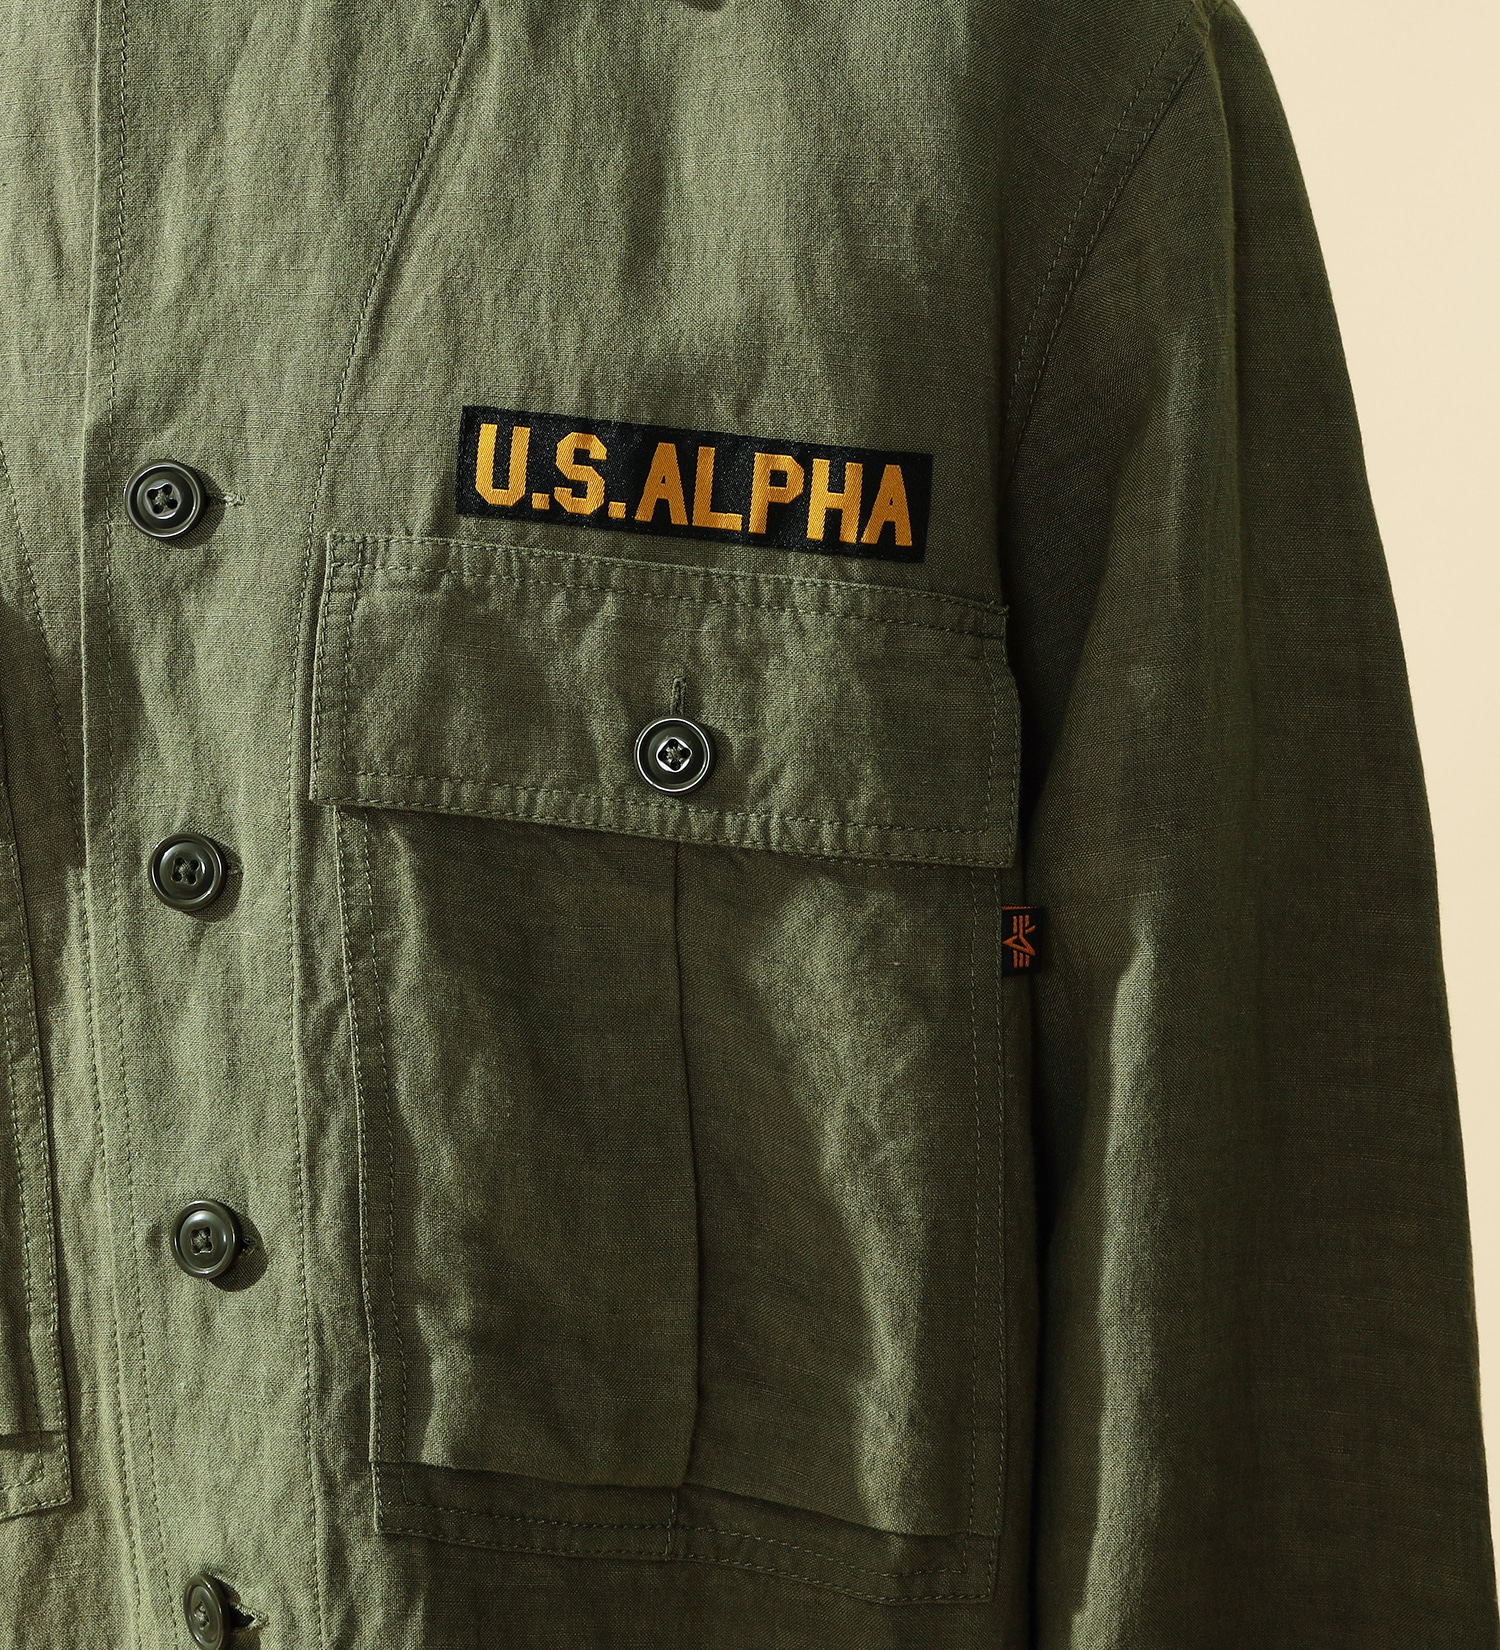 ALPHA(アルファ)のユーティリティリネンシャツ 長袖|トップス/シャツ/ブラウス/メンズ|オリーブ